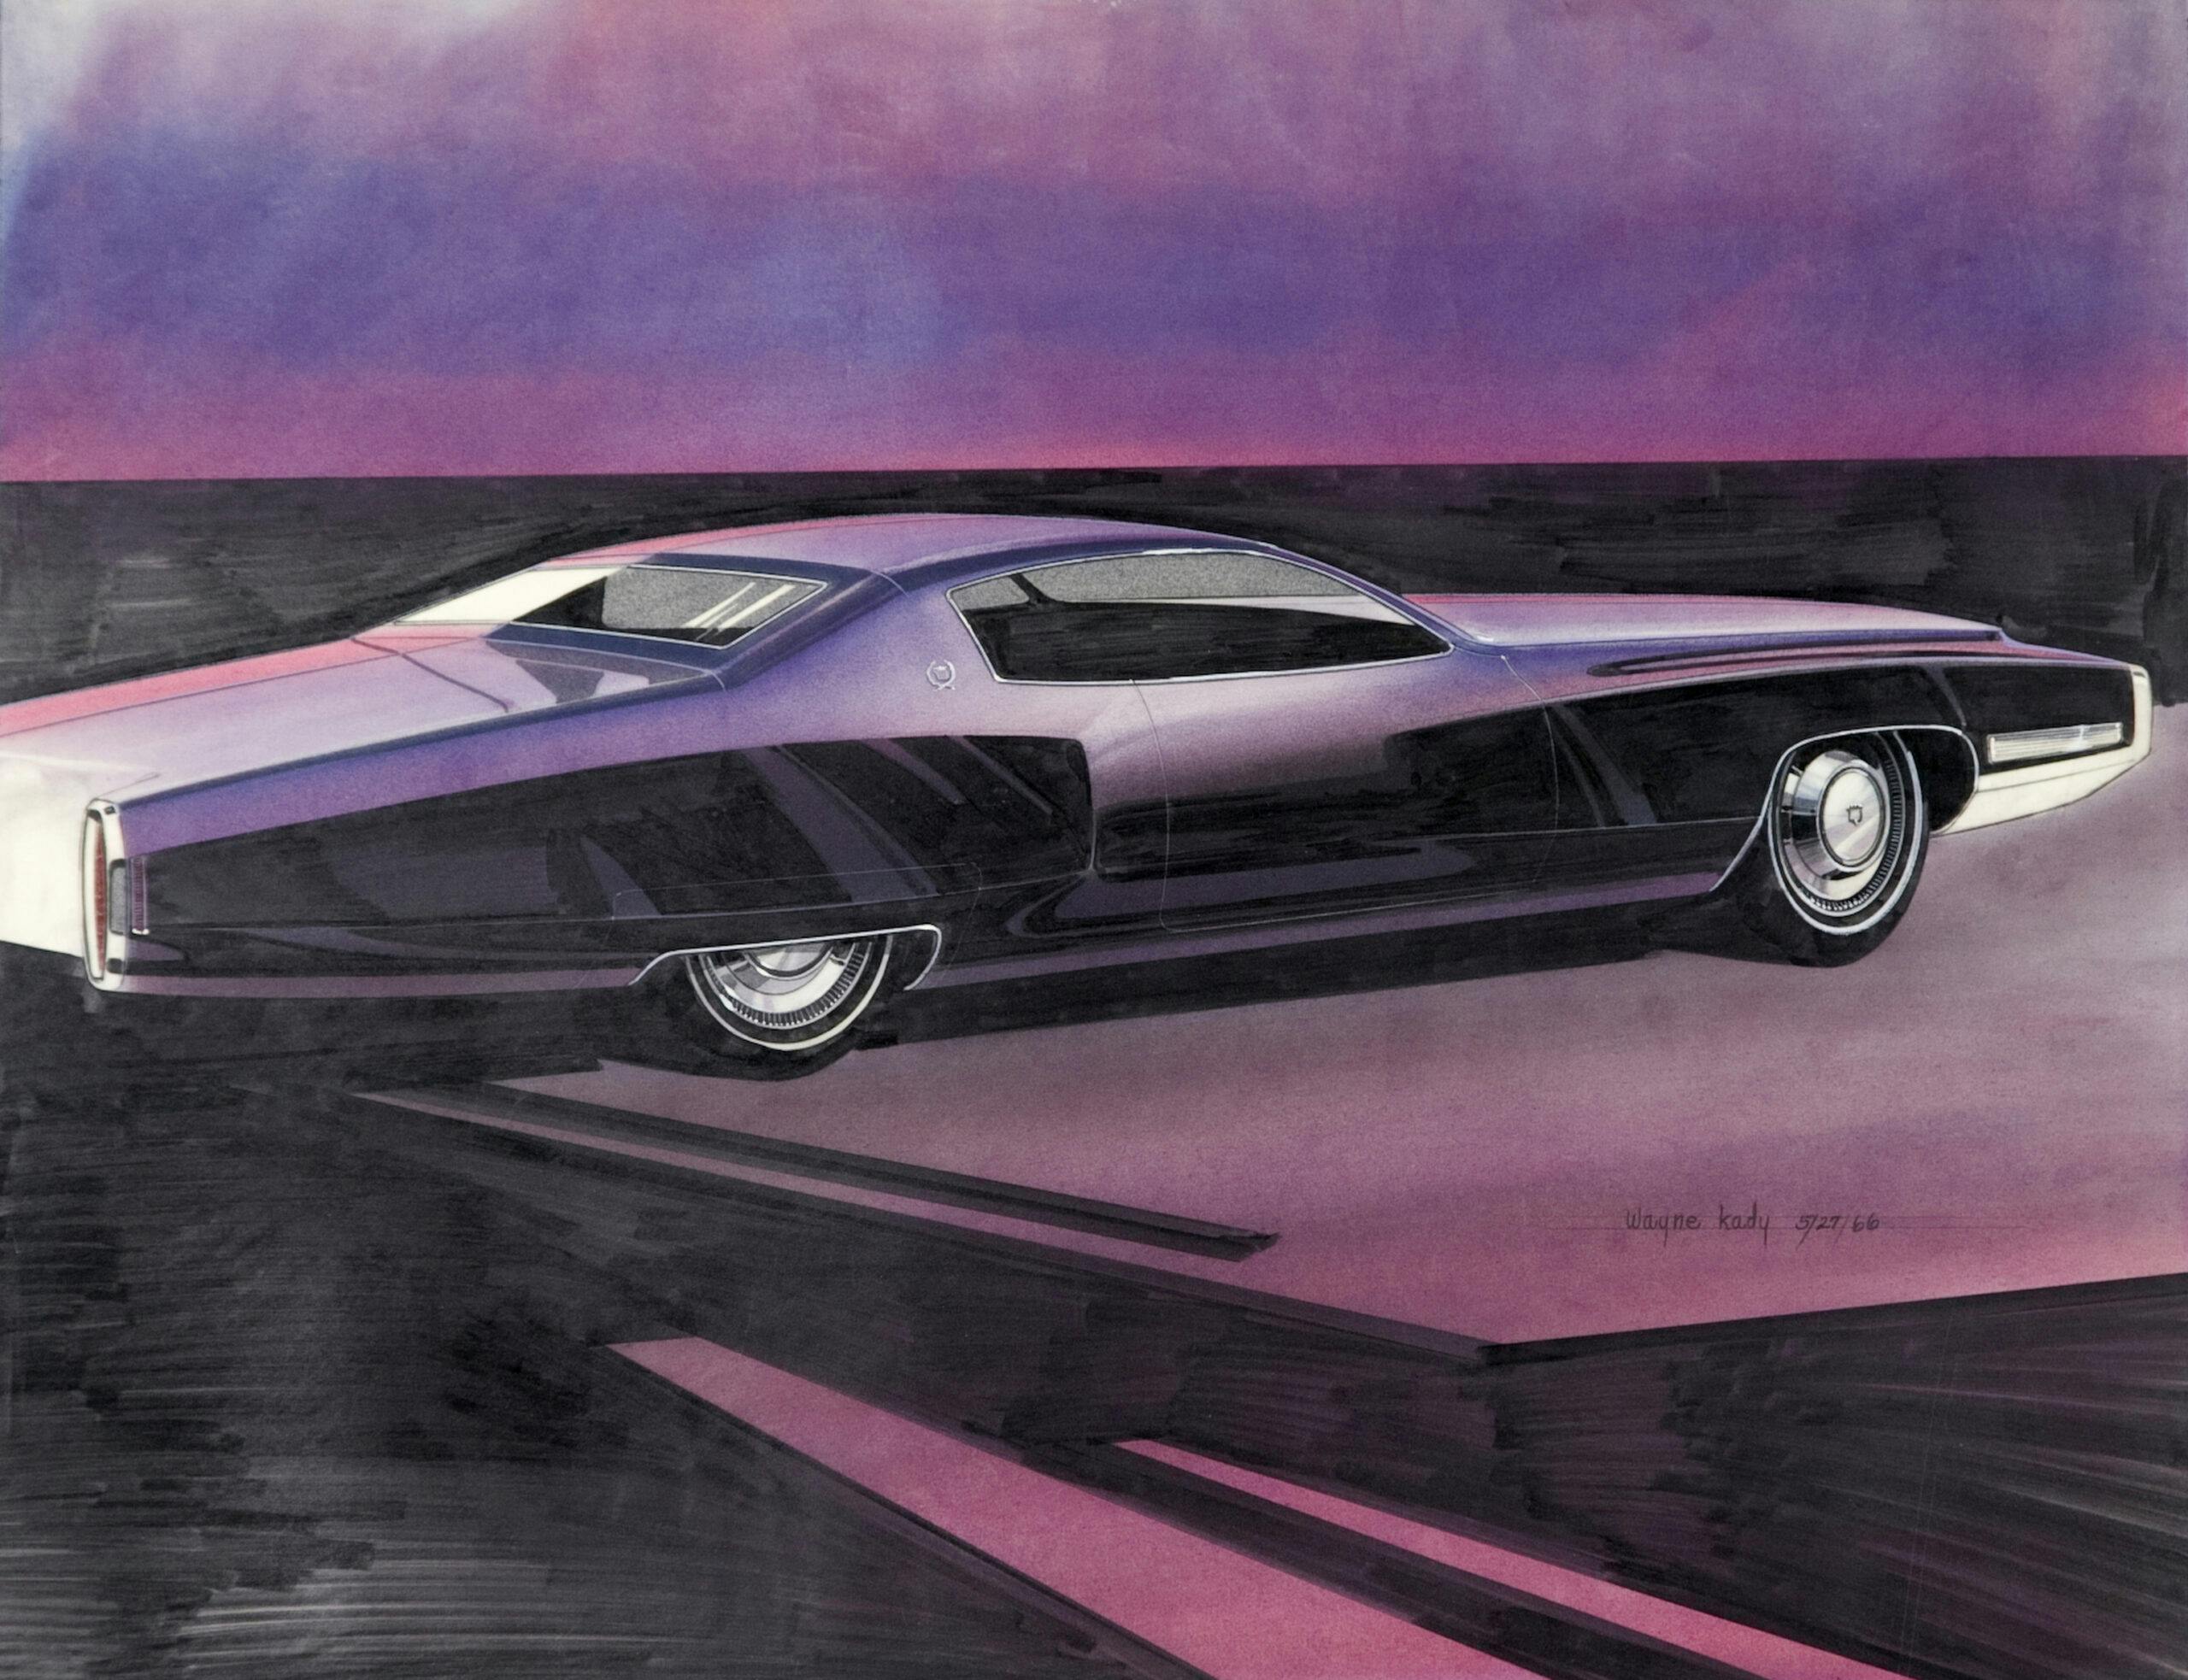 Cadillac Design Proposals wayne kady illustration purple pink illustration